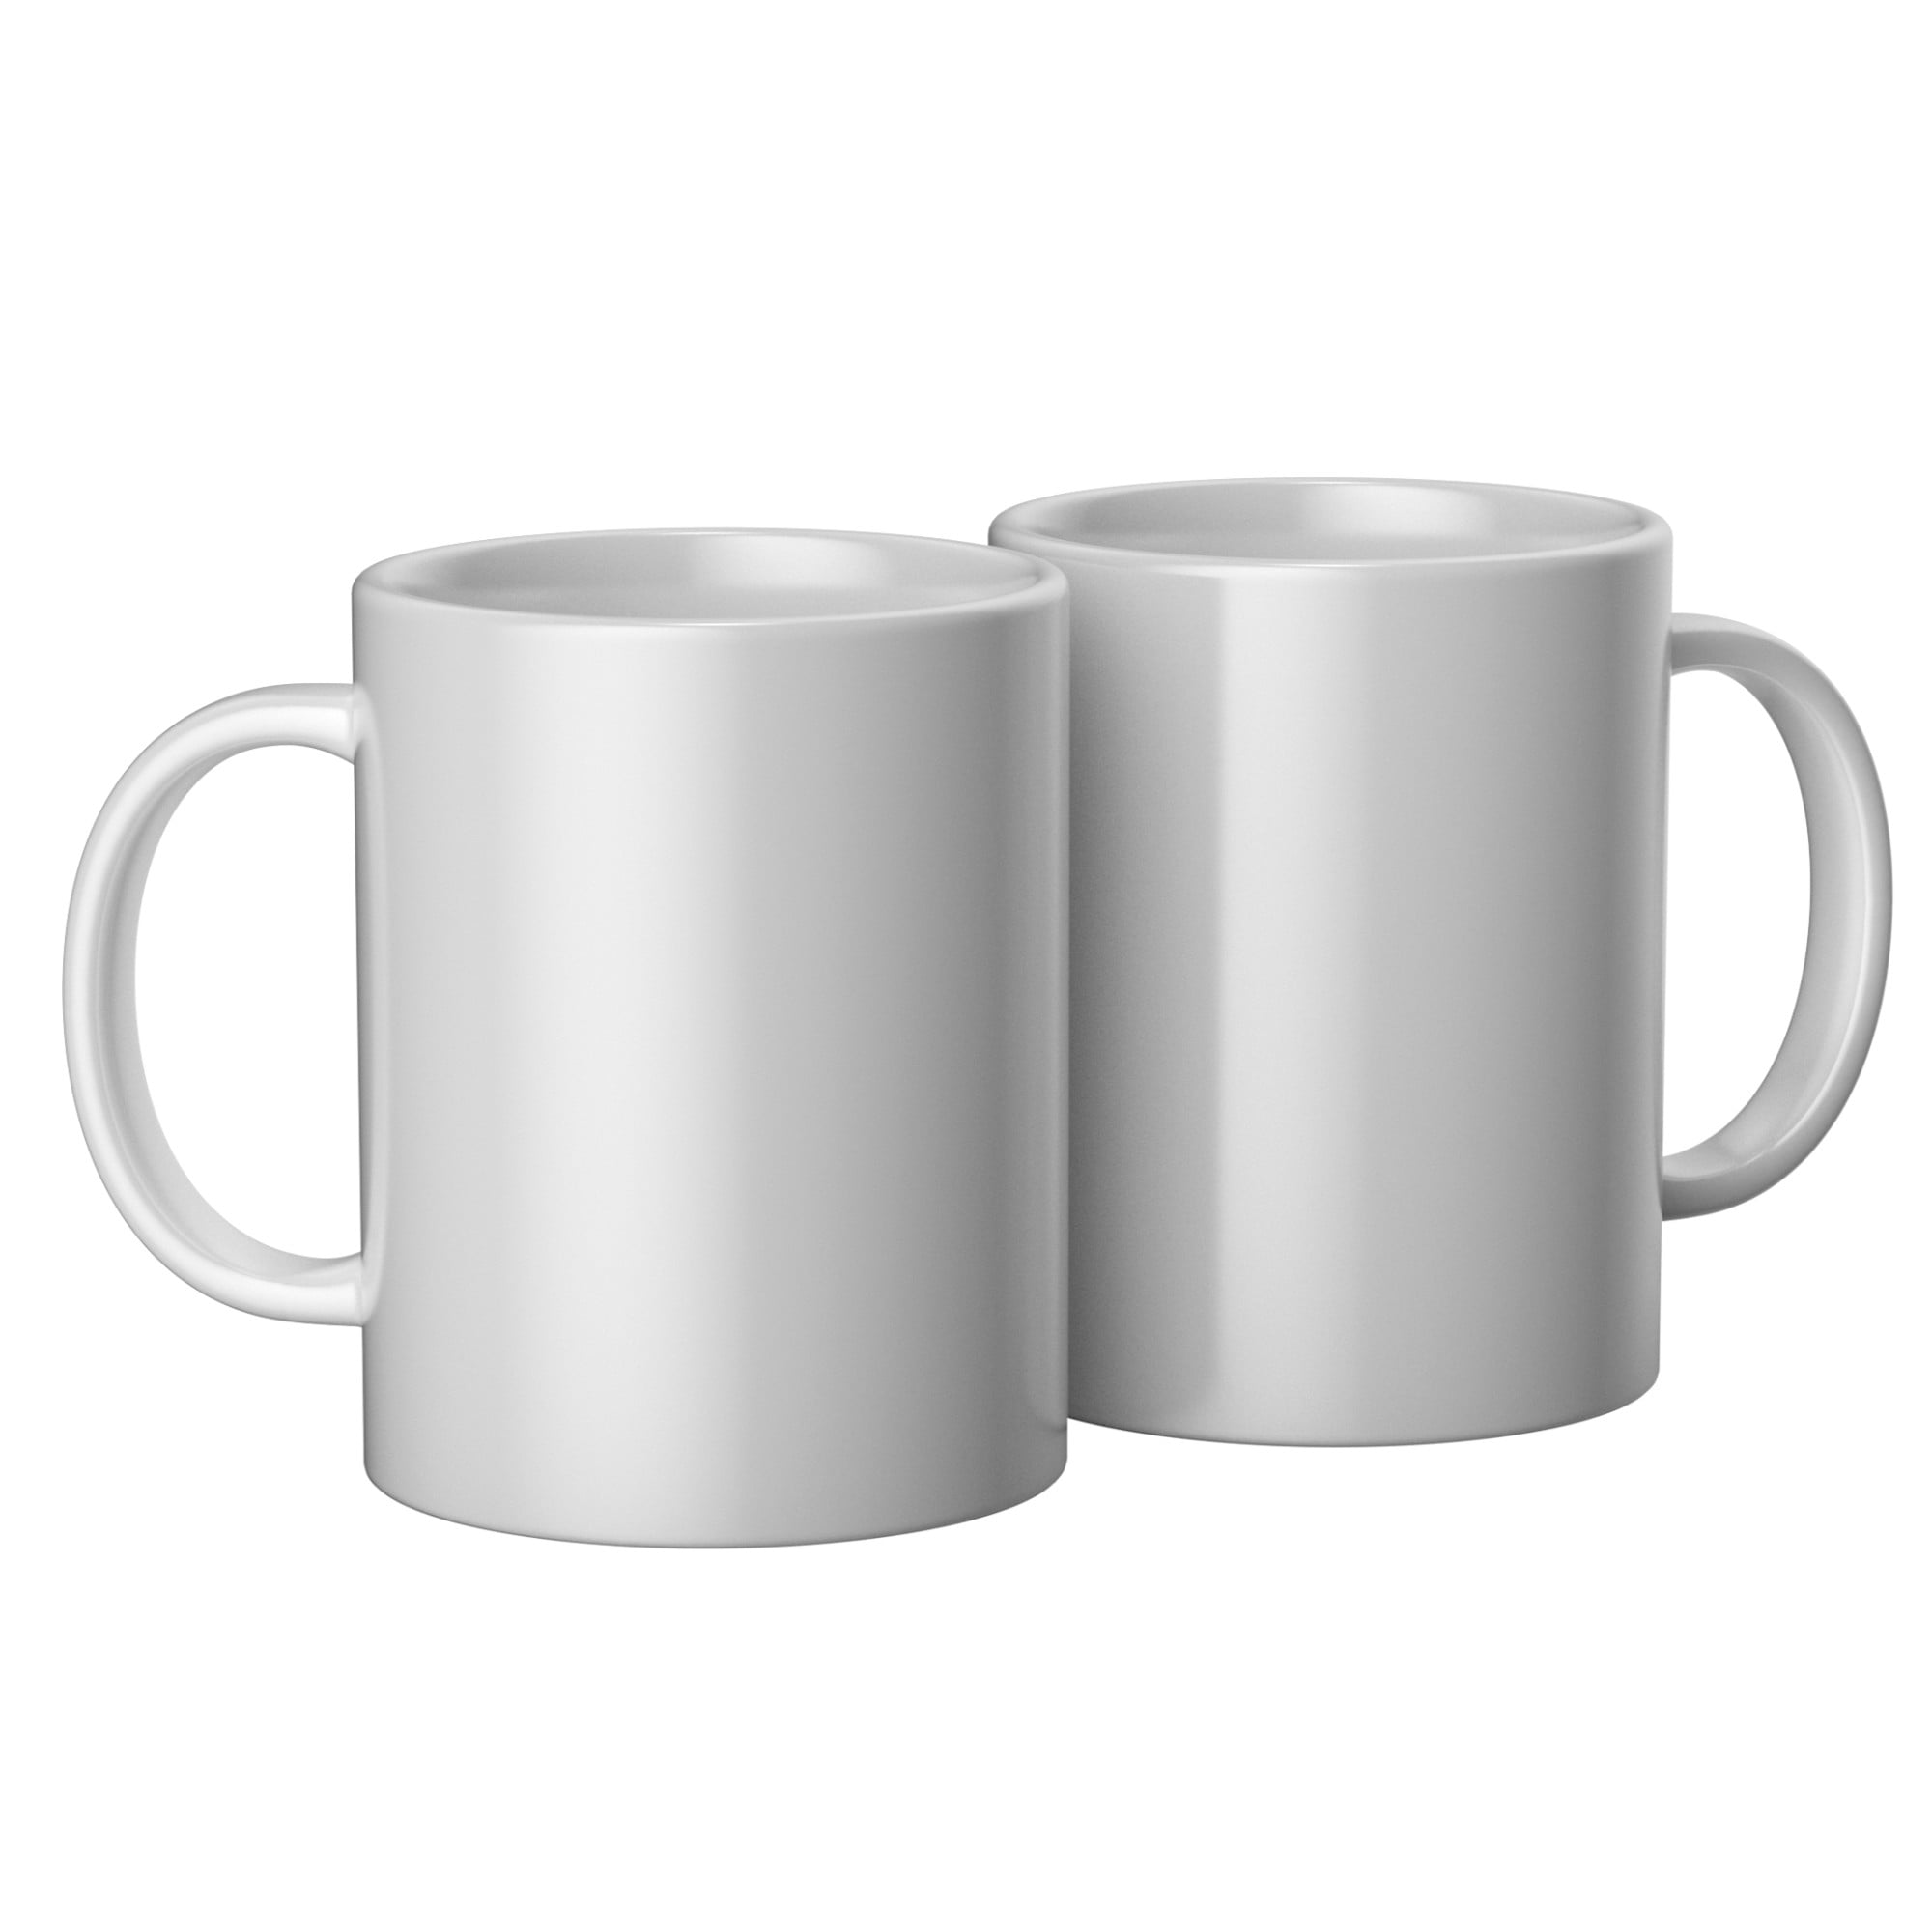 Cricut® Ceramic Mug Blank, White - 12 oz/340 ml (6 ct), 12 oz 